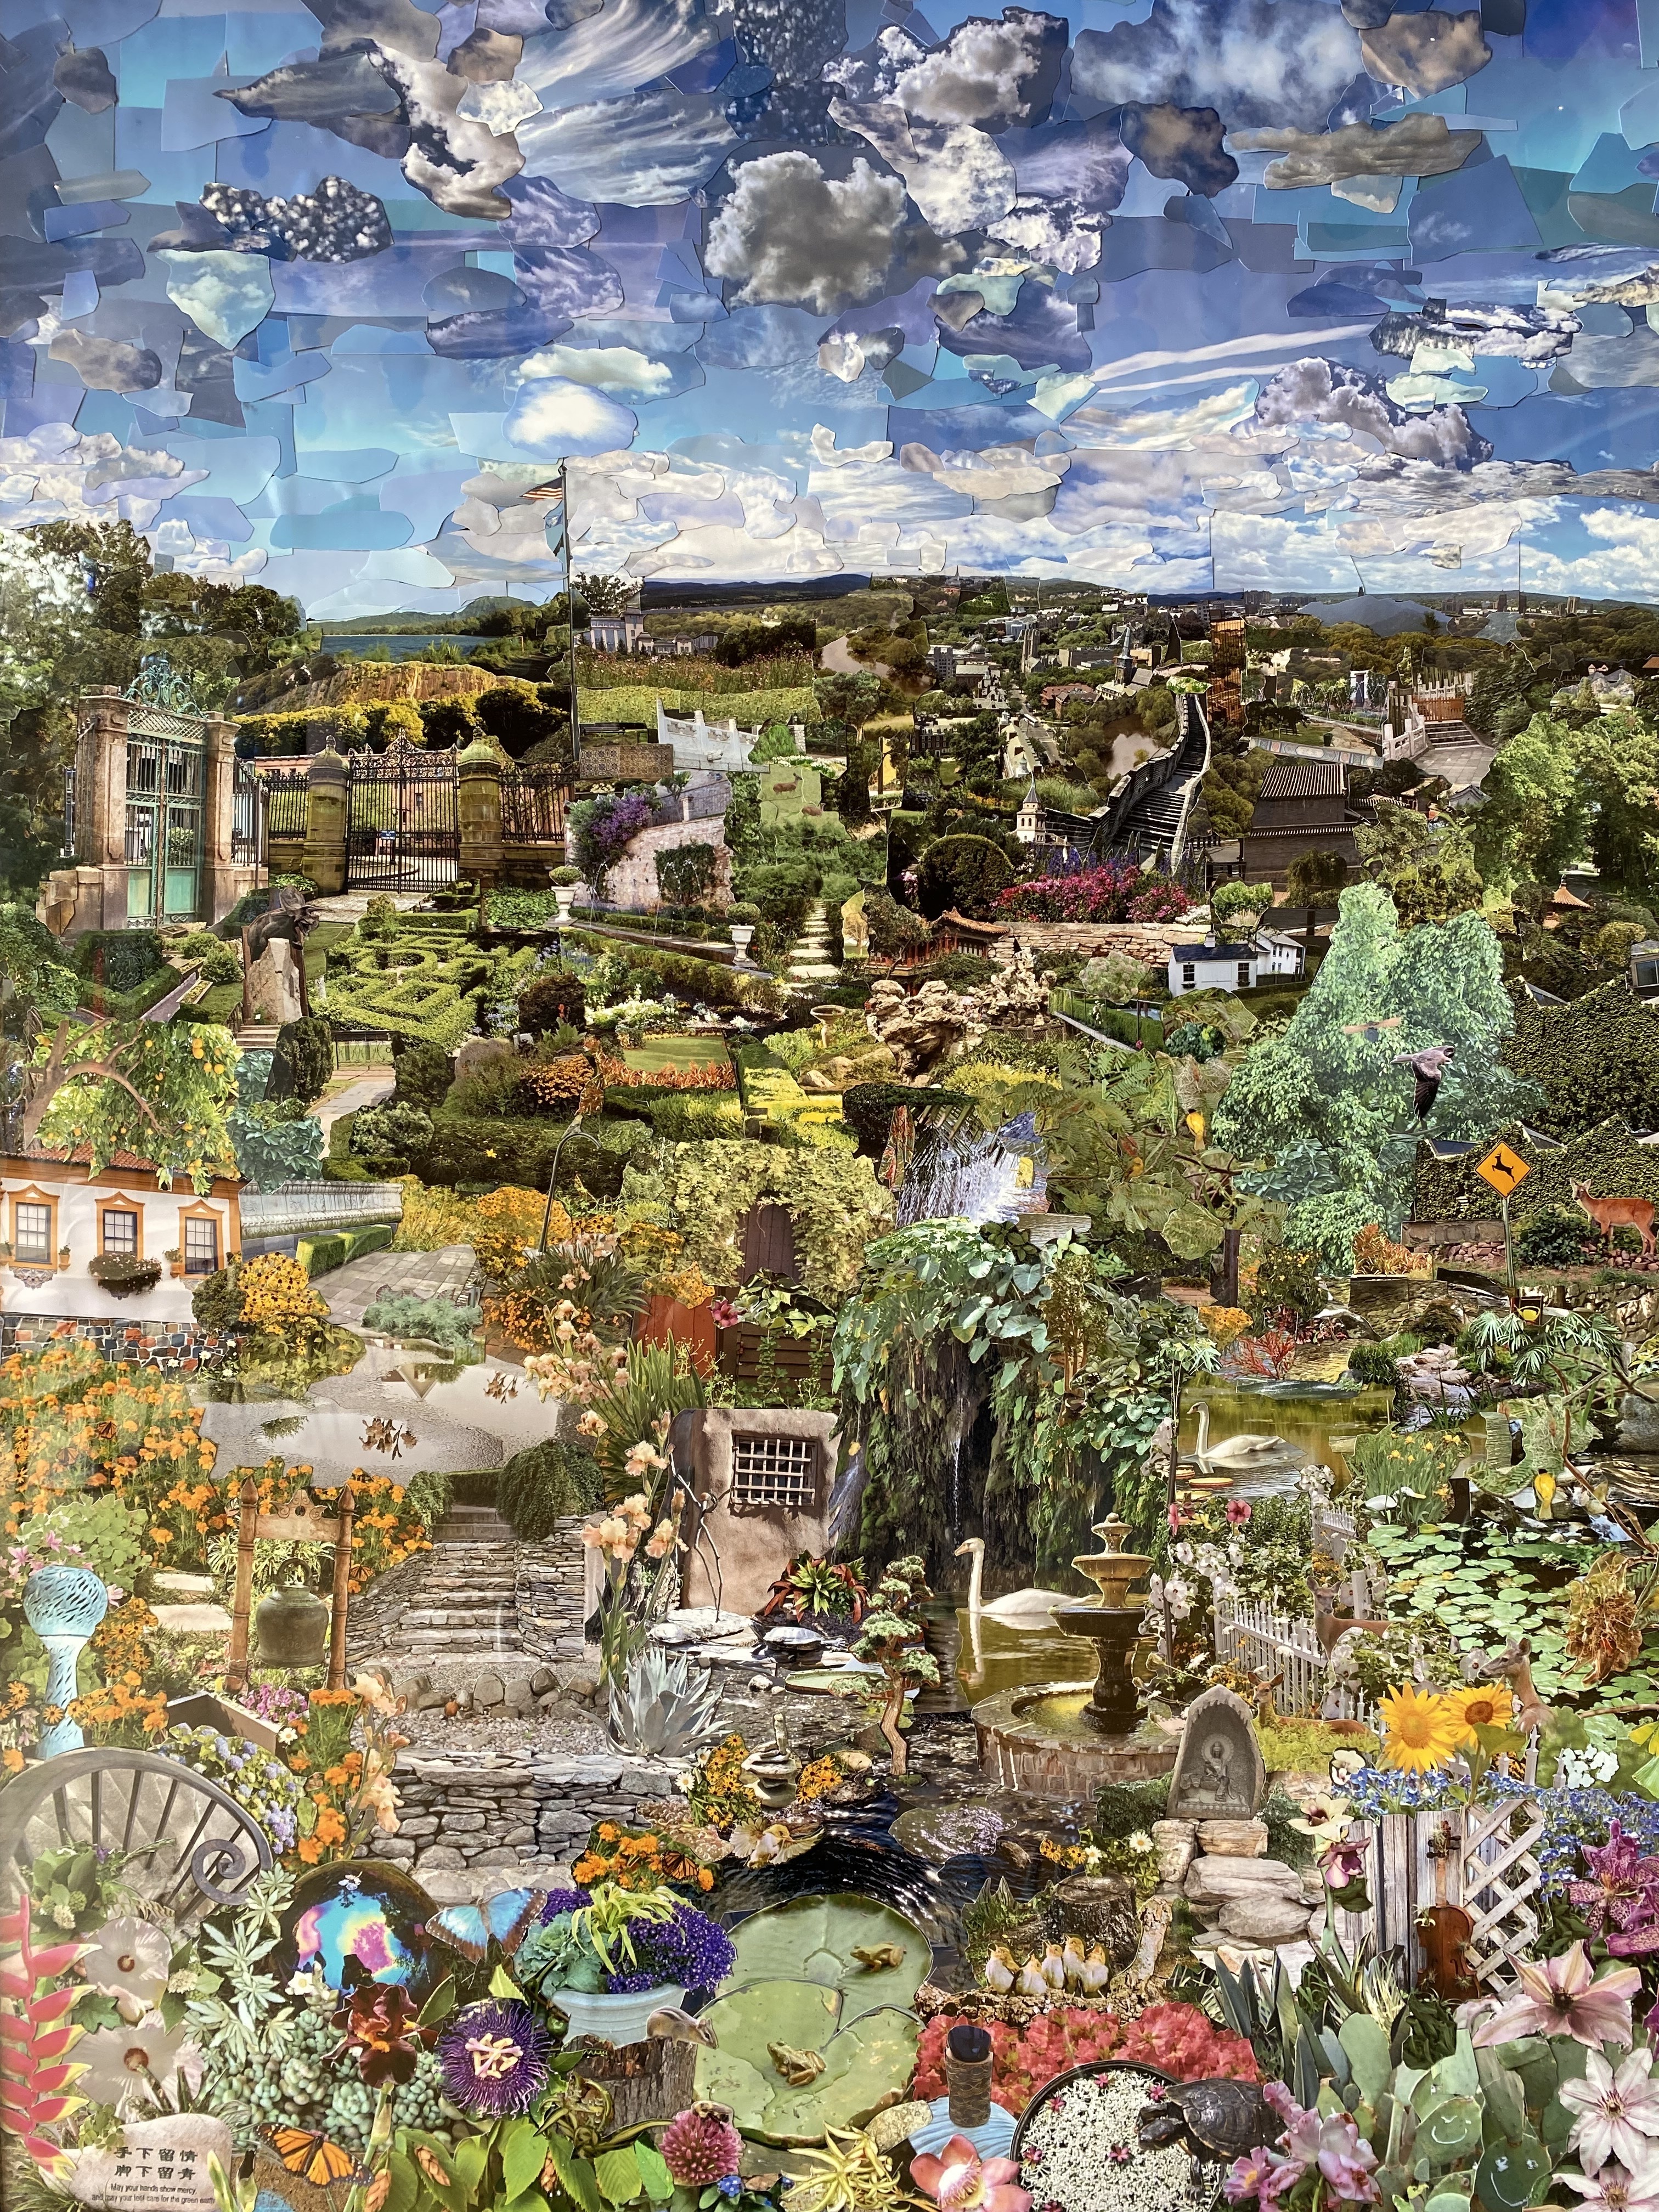 Rashmi Talpade, "Summer Garden," 40x30 in. Photocollage, On loan from the Yale New Haven Children's Hospital